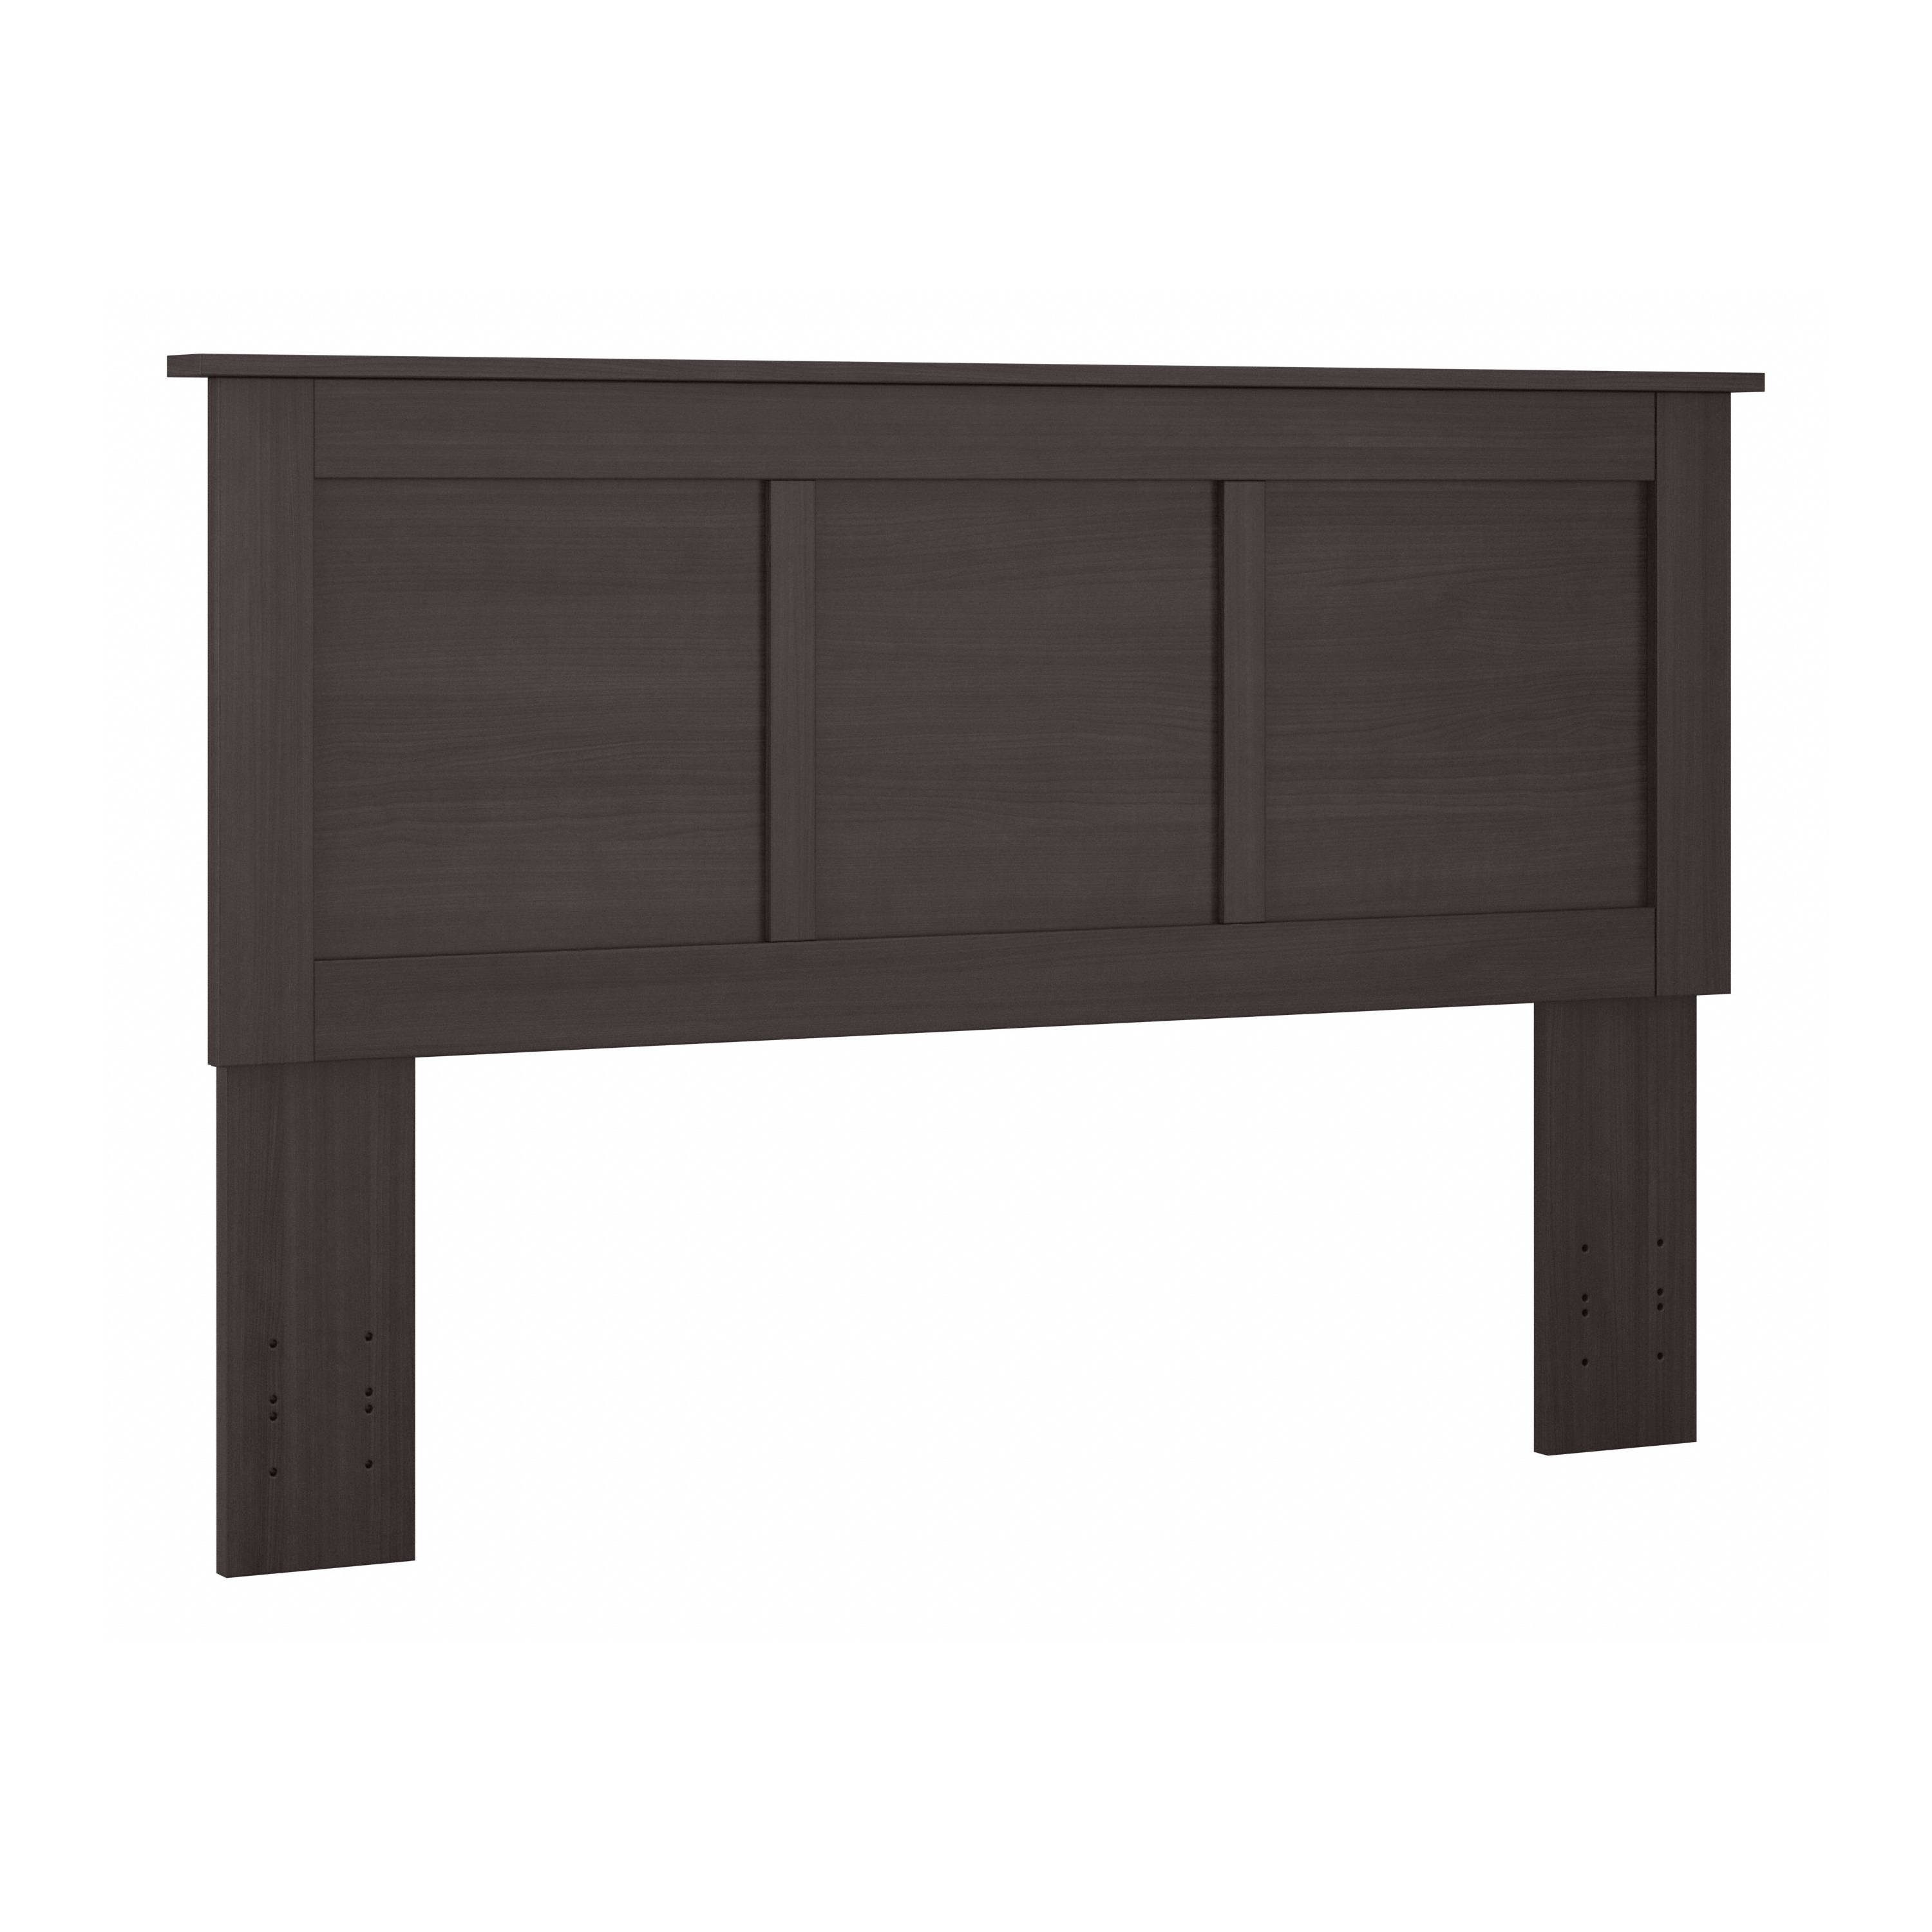 Shop Bush Furniture Somerset Full/Queen Size Headboard 02 STQ165SG #color_storm gray